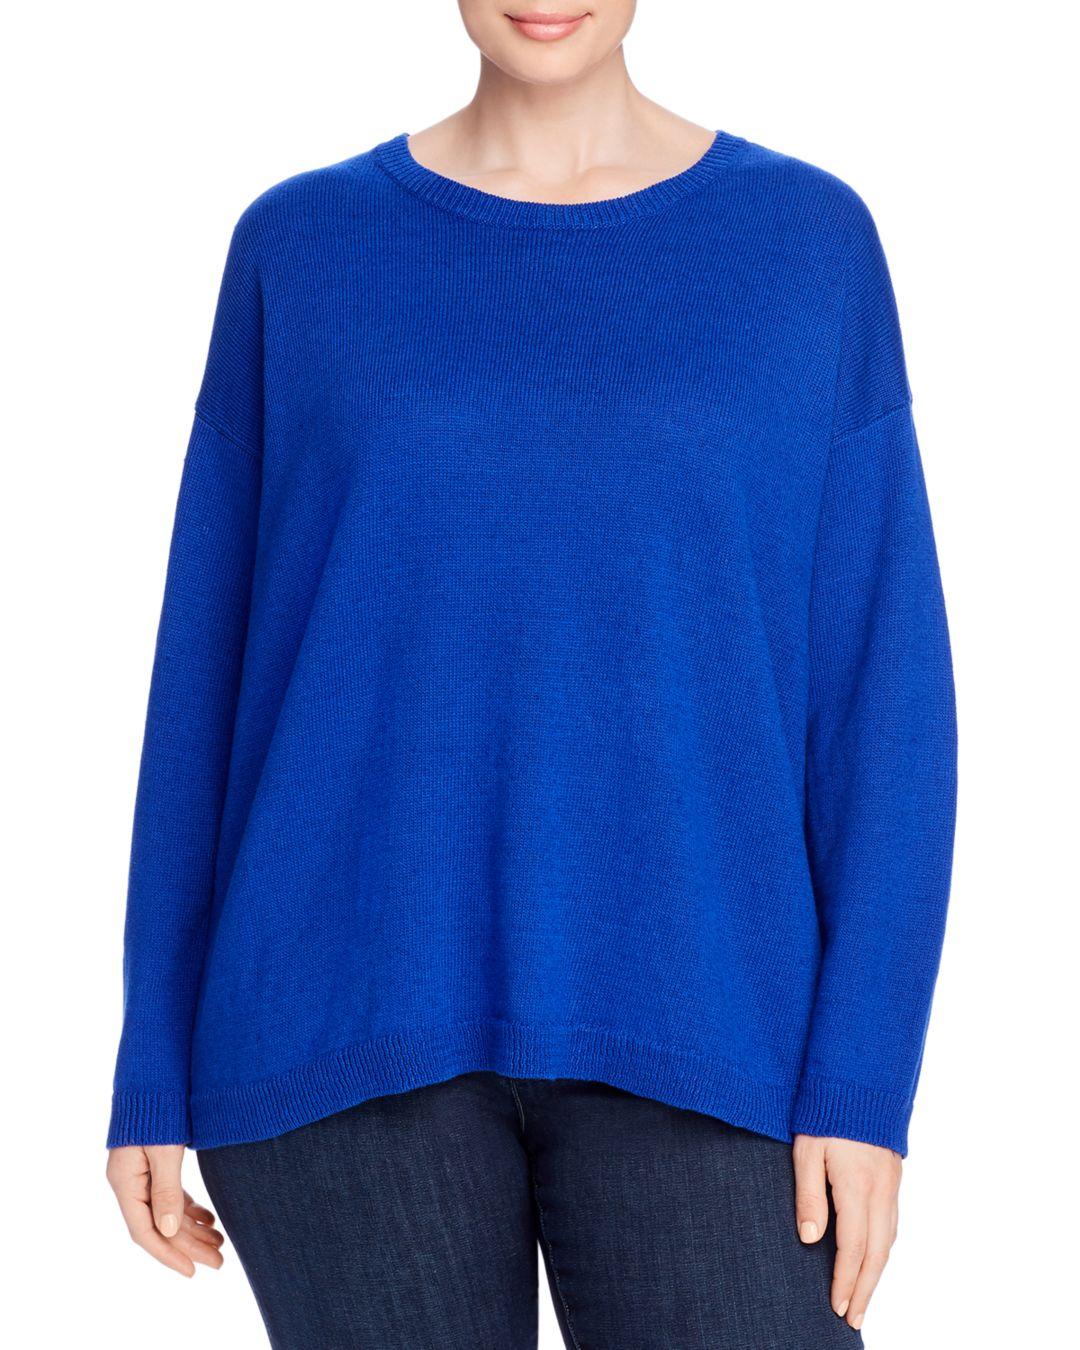 Eileen Fisher Linen Crewneck Boxy Sweater in Blue - Lyst